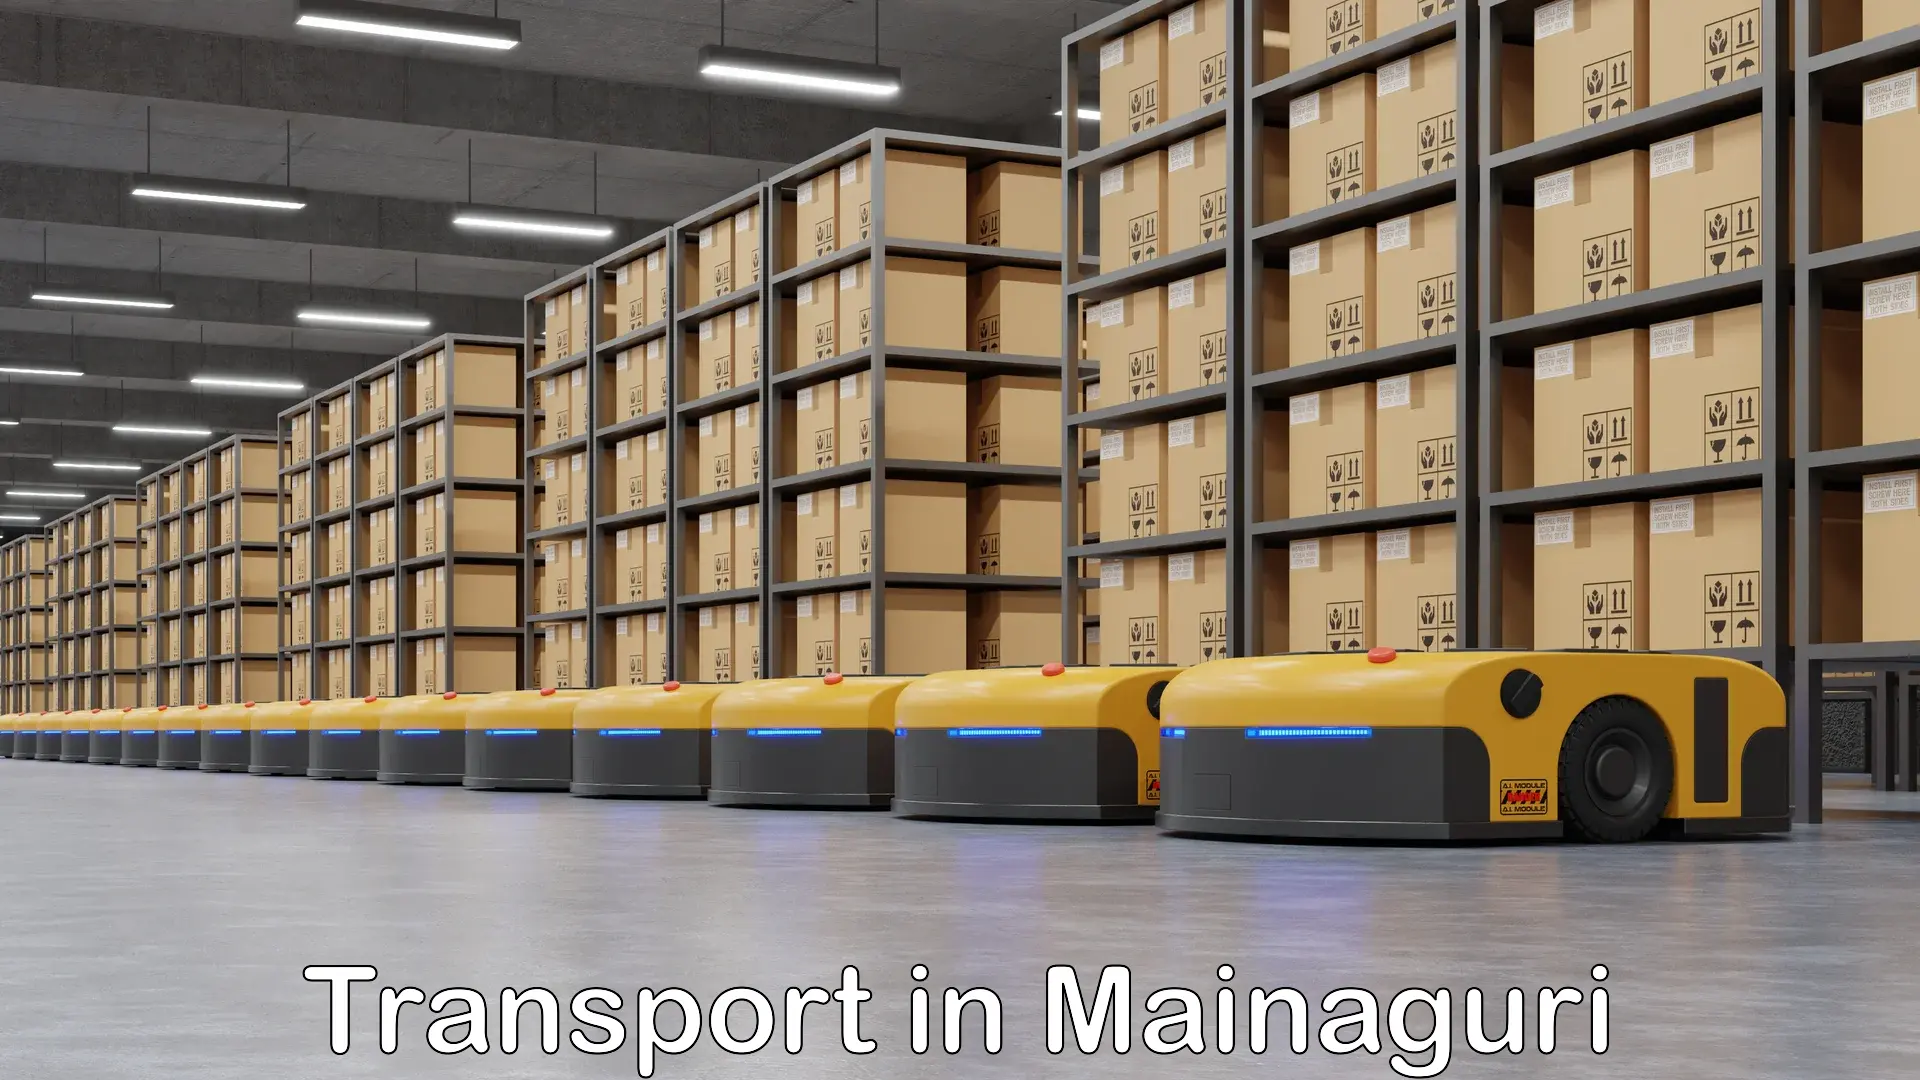 Express transport services in Mainaguri